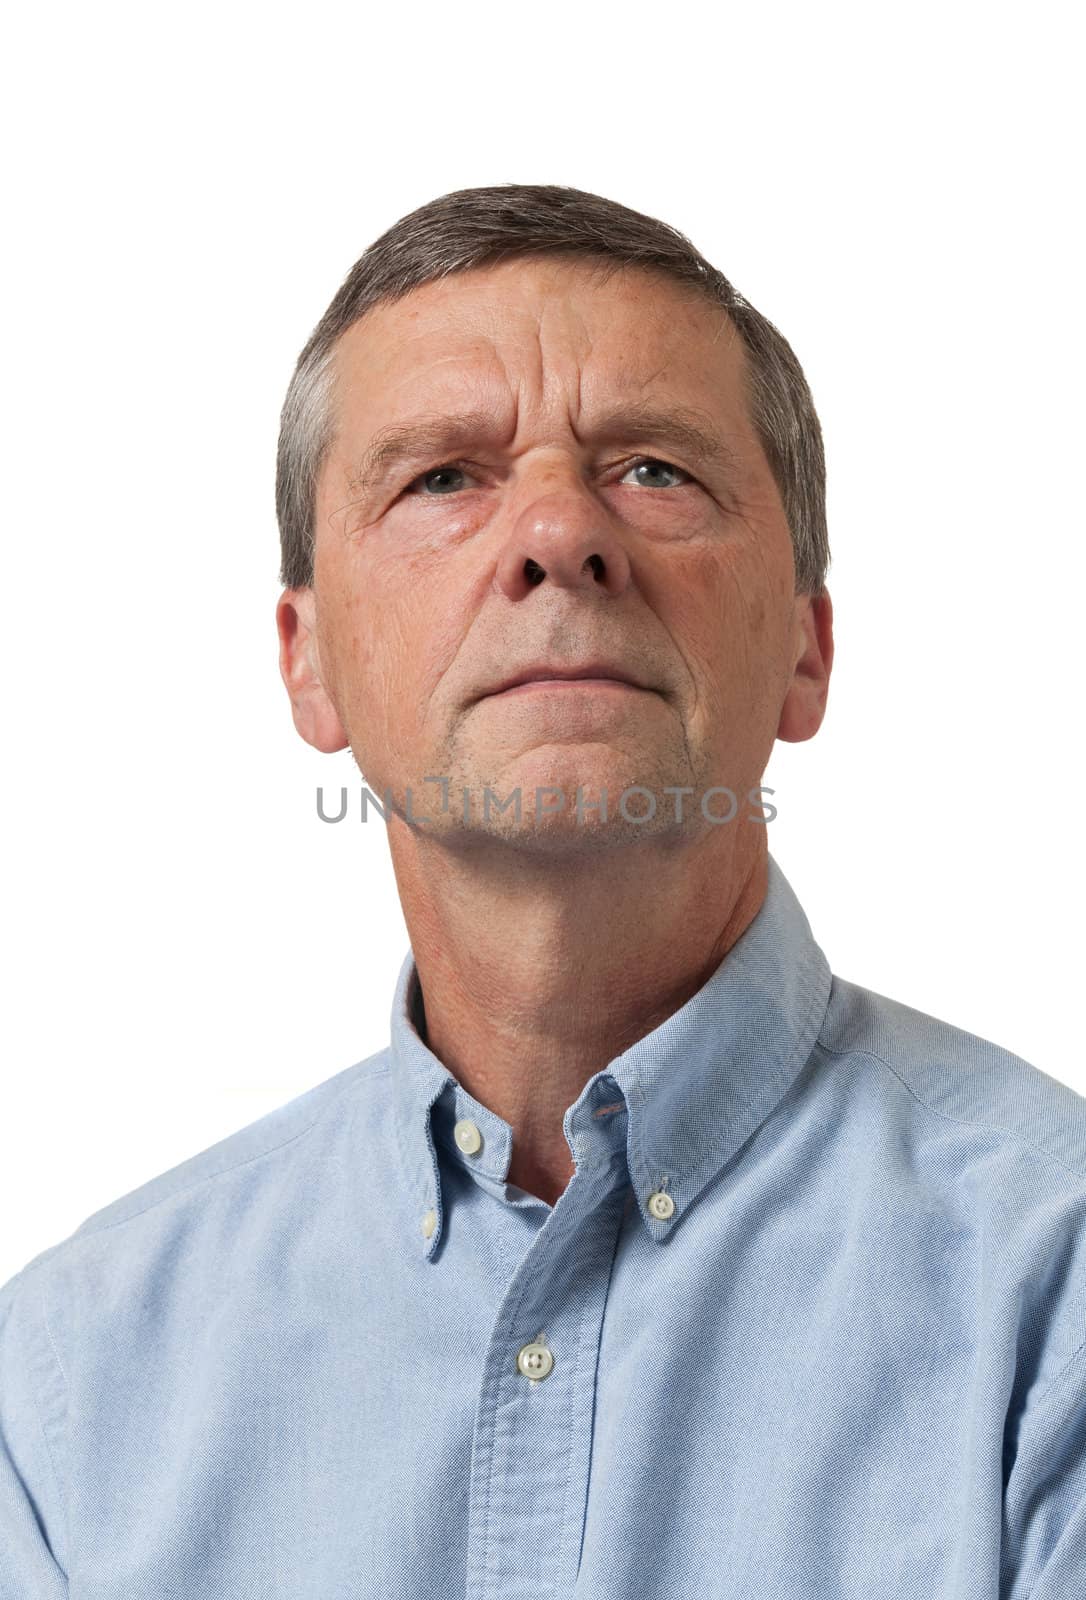 Senior man in blue shirt looks pensive by steheap